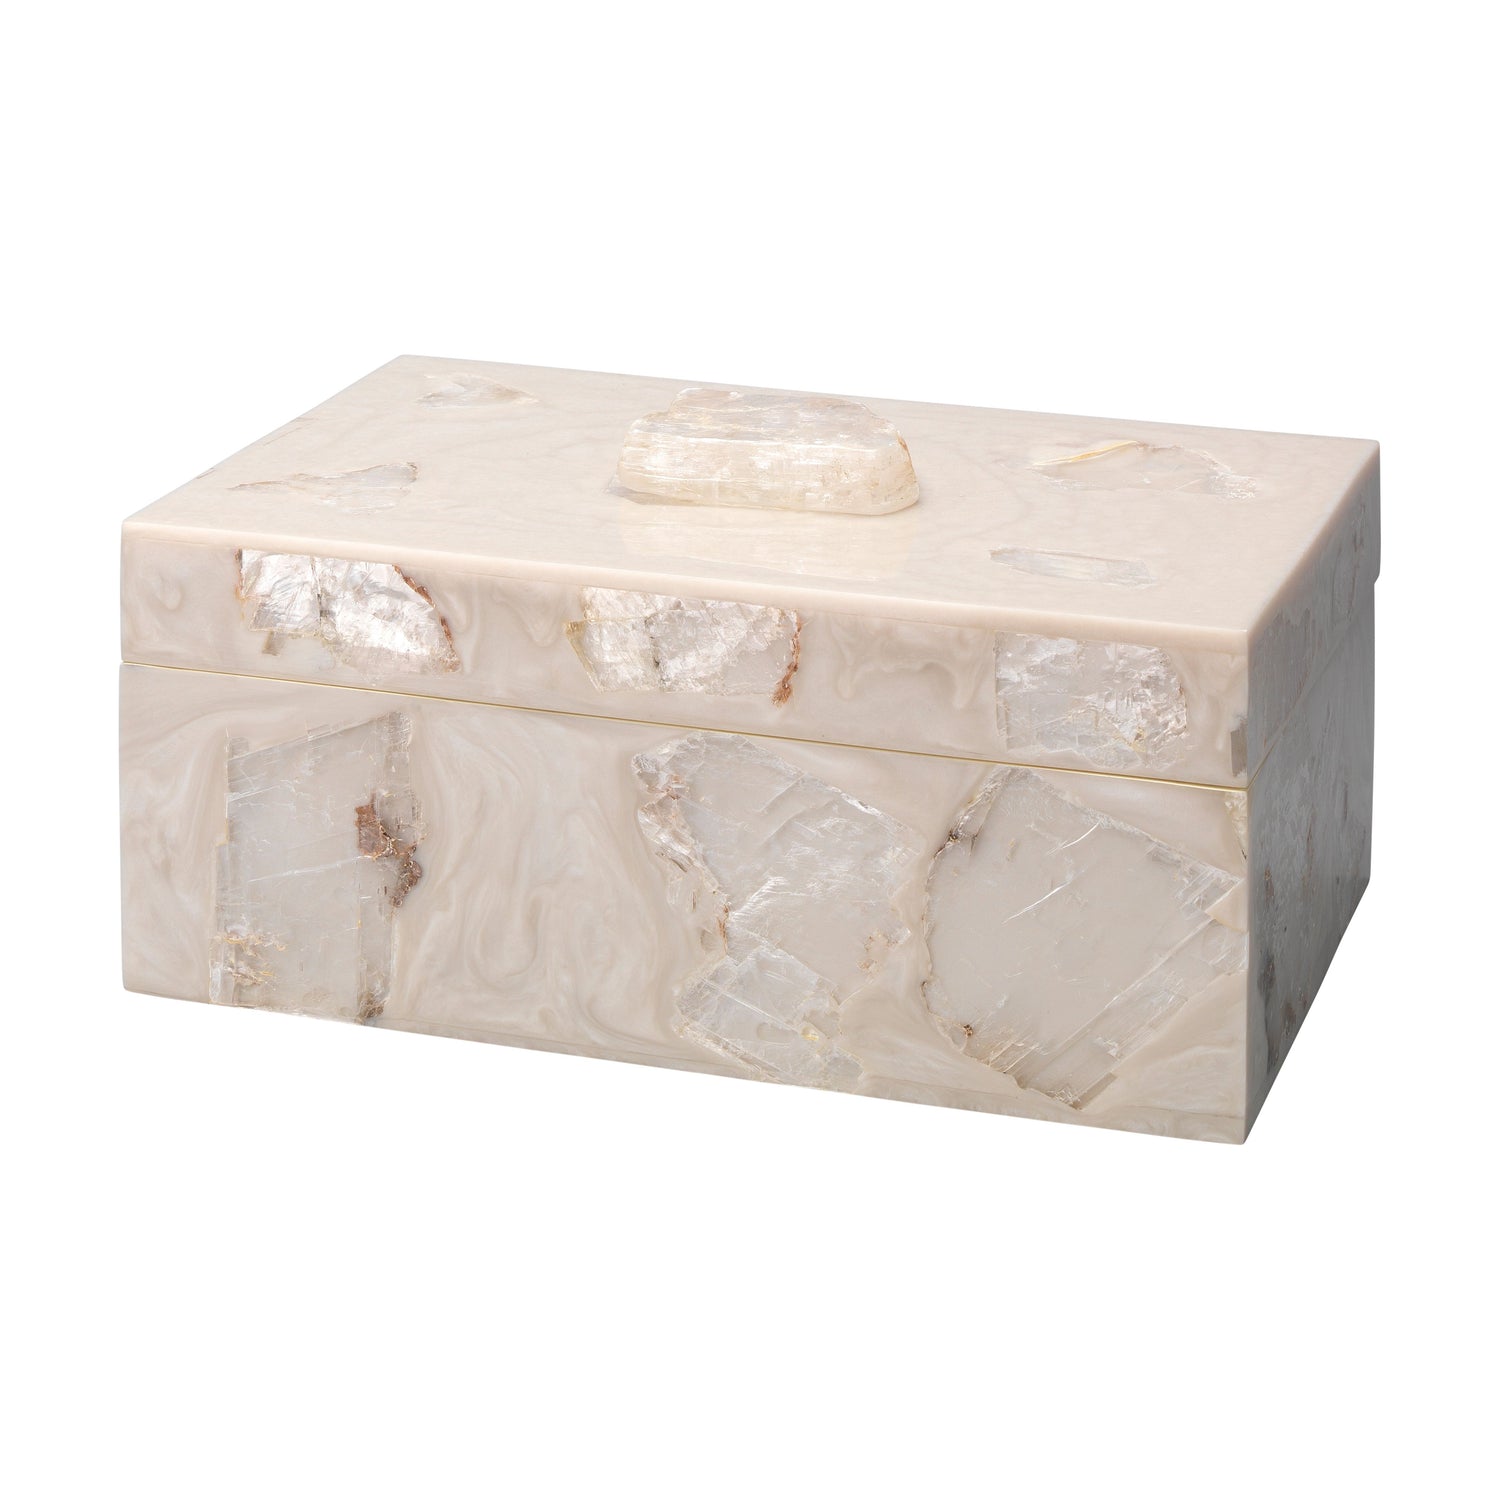 Jamie Young Company - 7PART-BXPECL - Parthenon Box - Parthenon - Cream